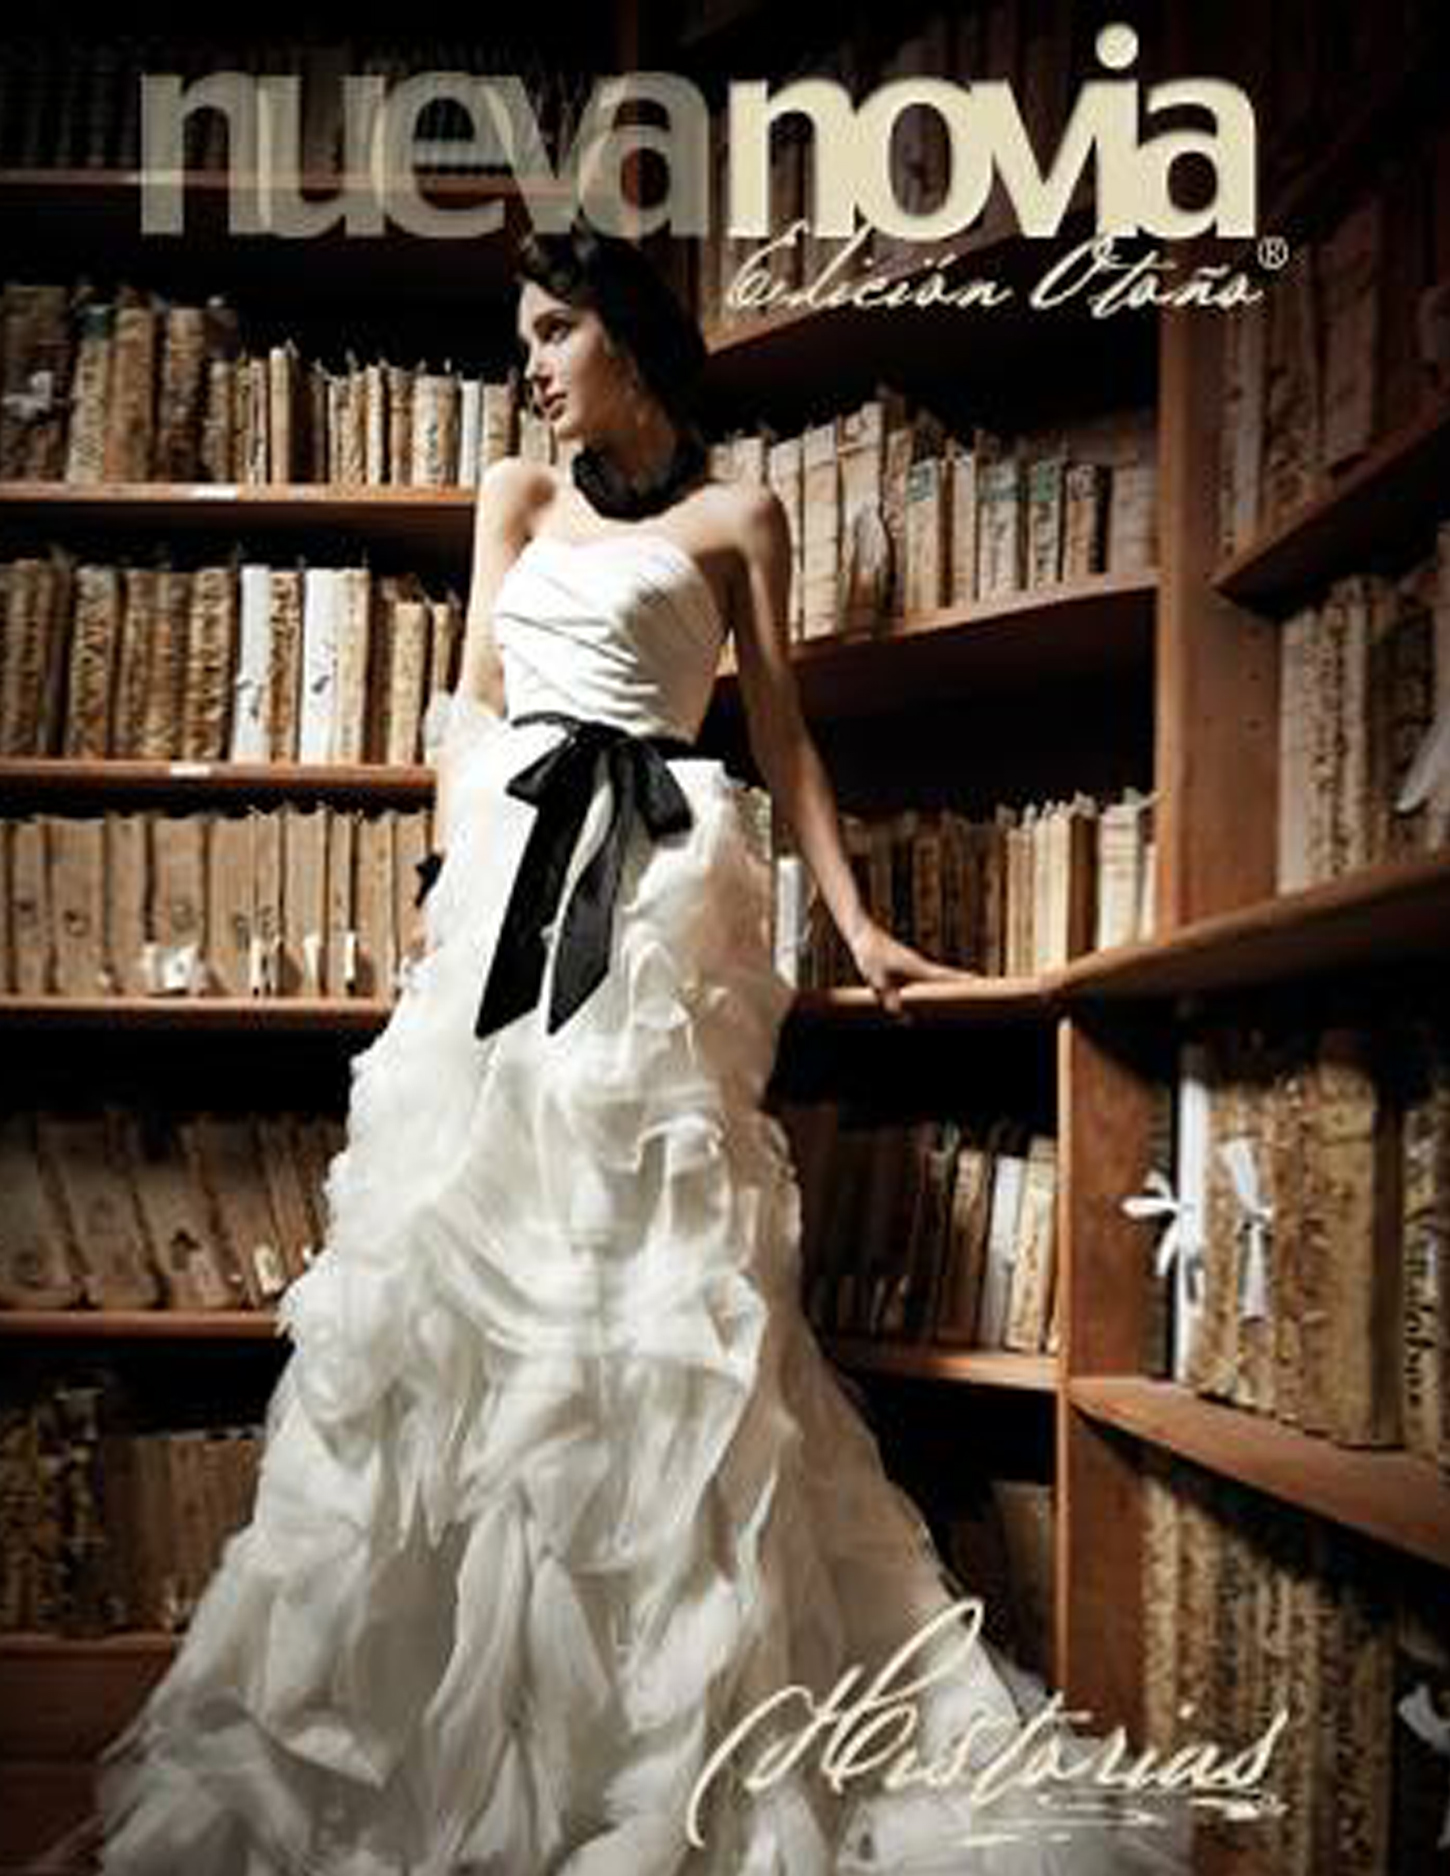 International fashion magazine cover shot in Mexico